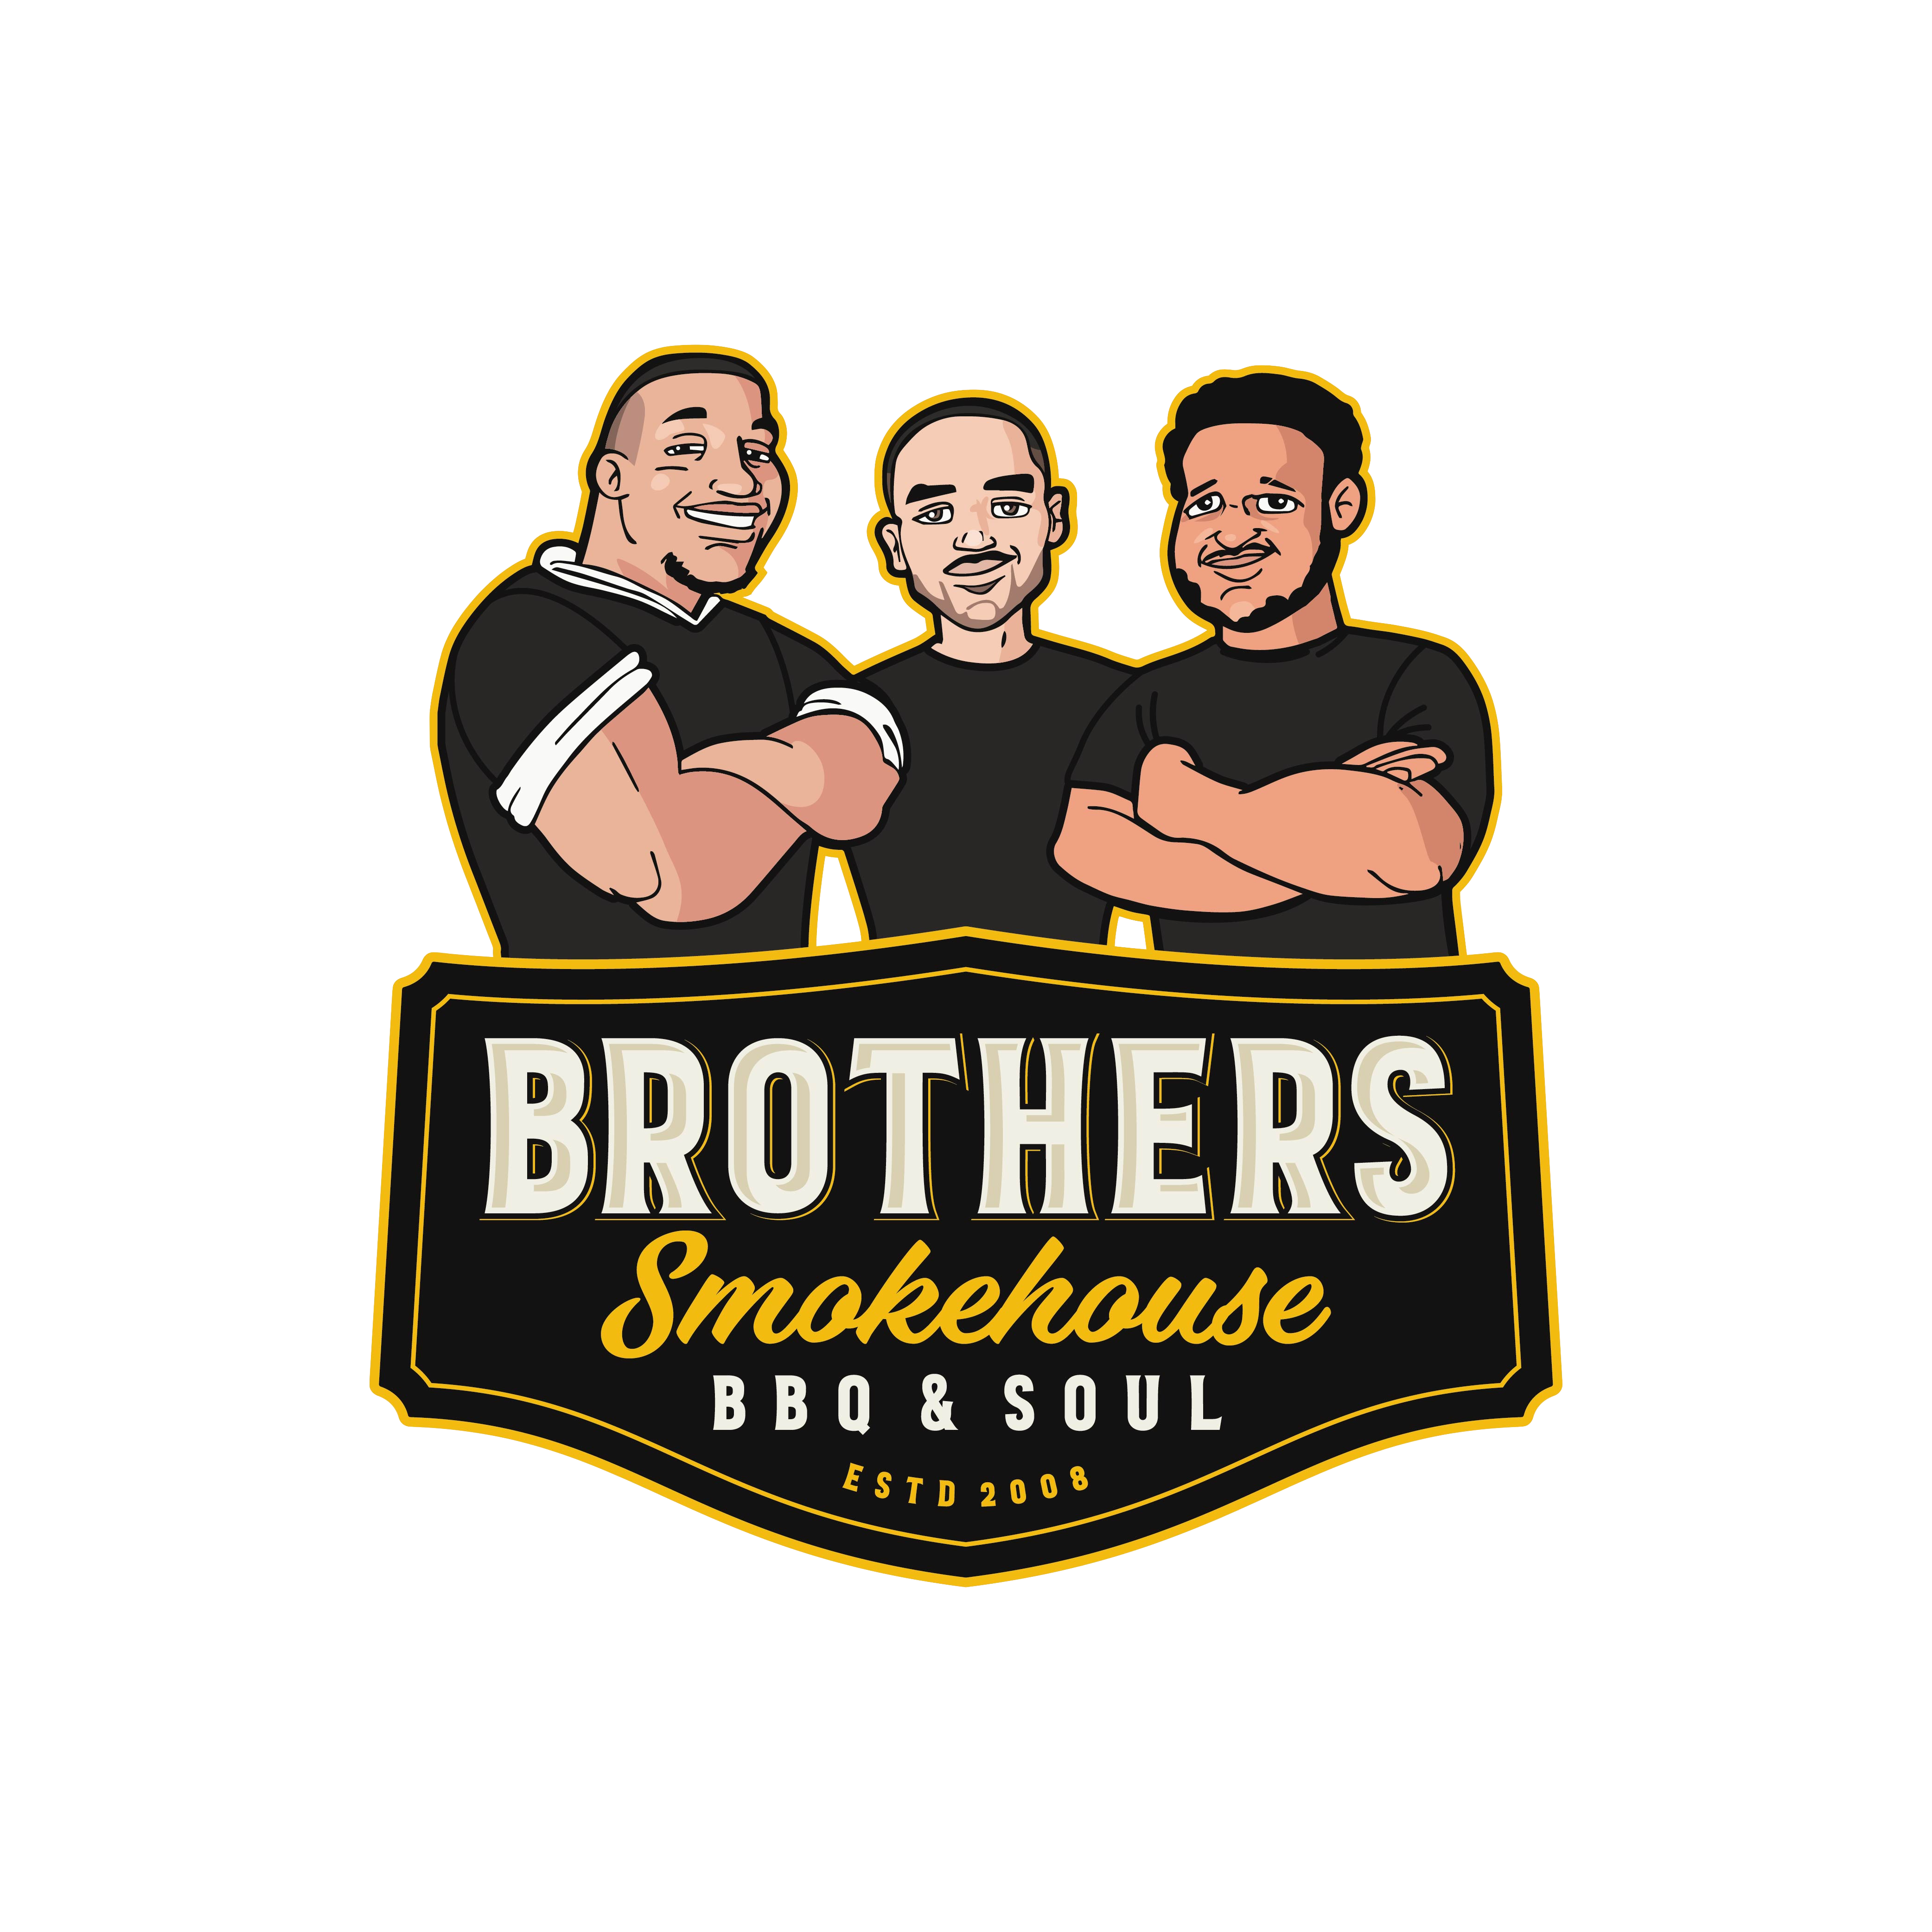 Brother's Smokehouse BBQ & Soul - Restaurant in Ramsey, NJ